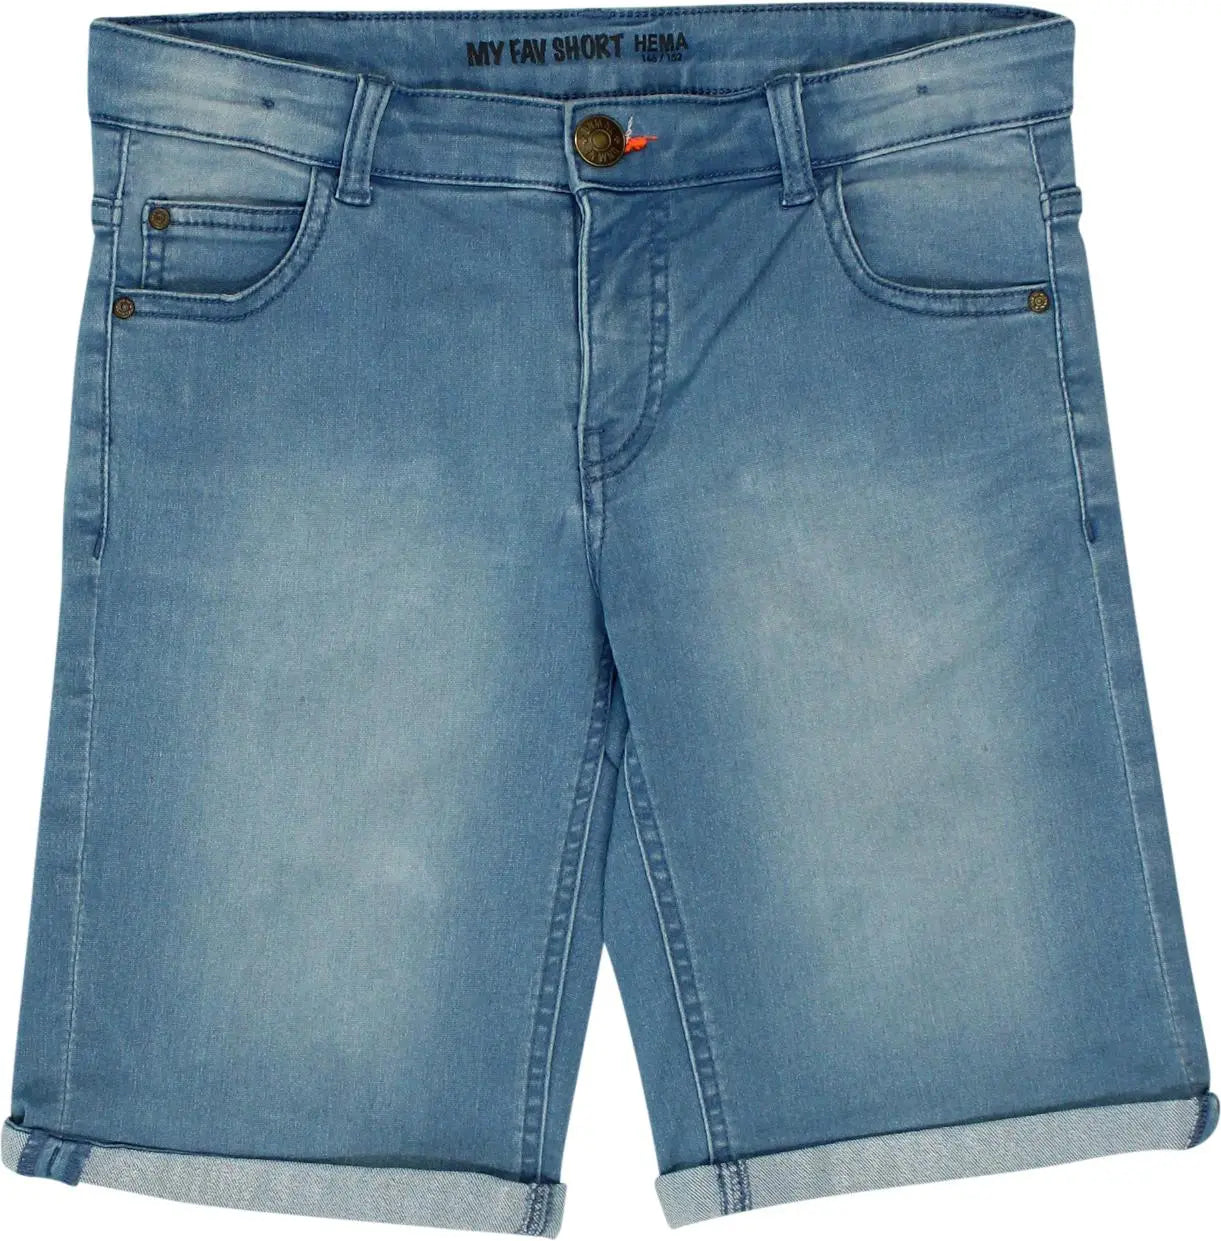 HEMA - Denim Shorts- ThriftTale.com - Vintage and second handclothing